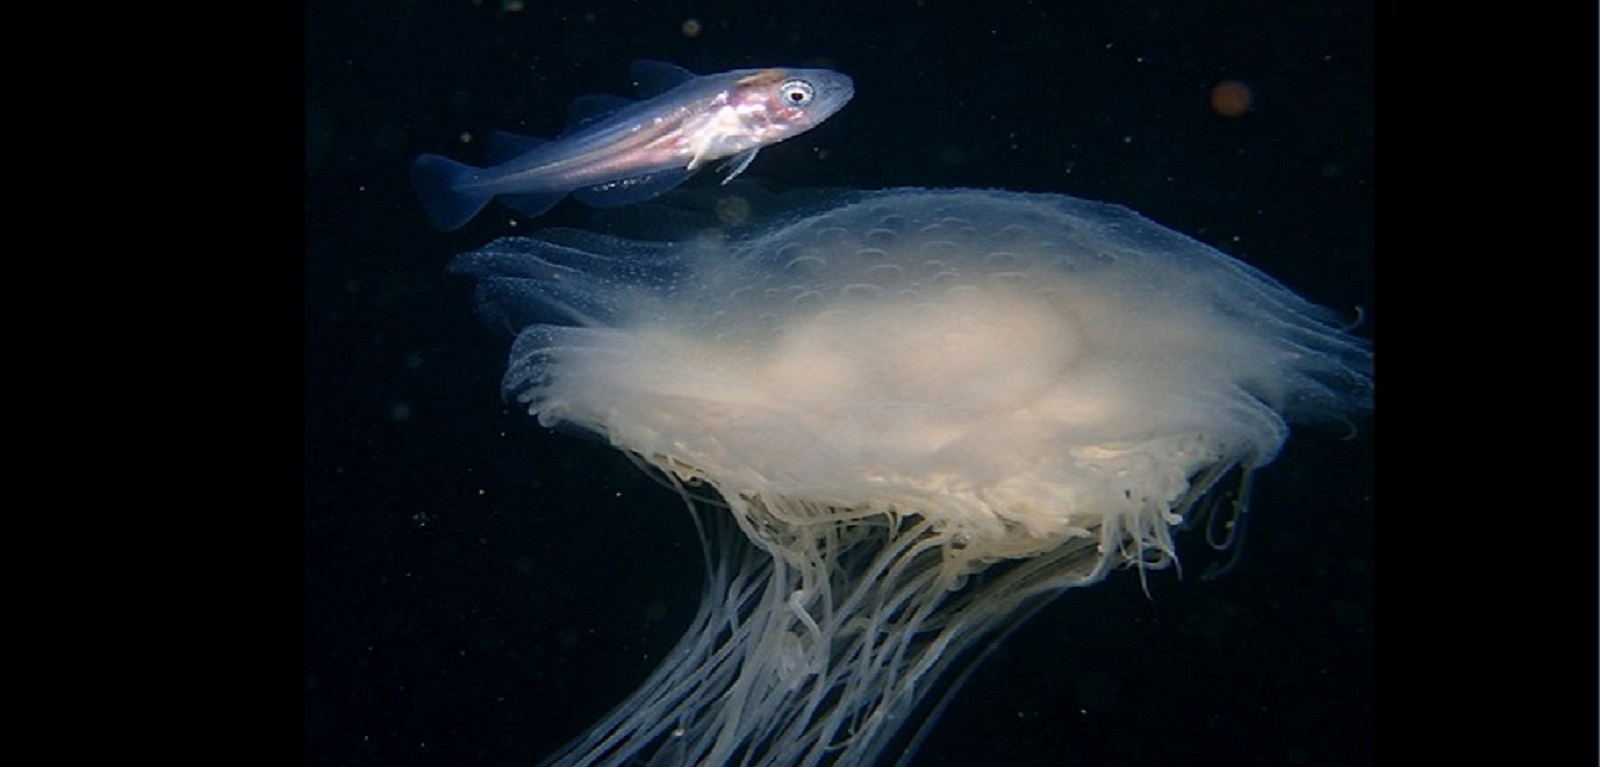 Jellyfish and Fish image by Sarah Bowen